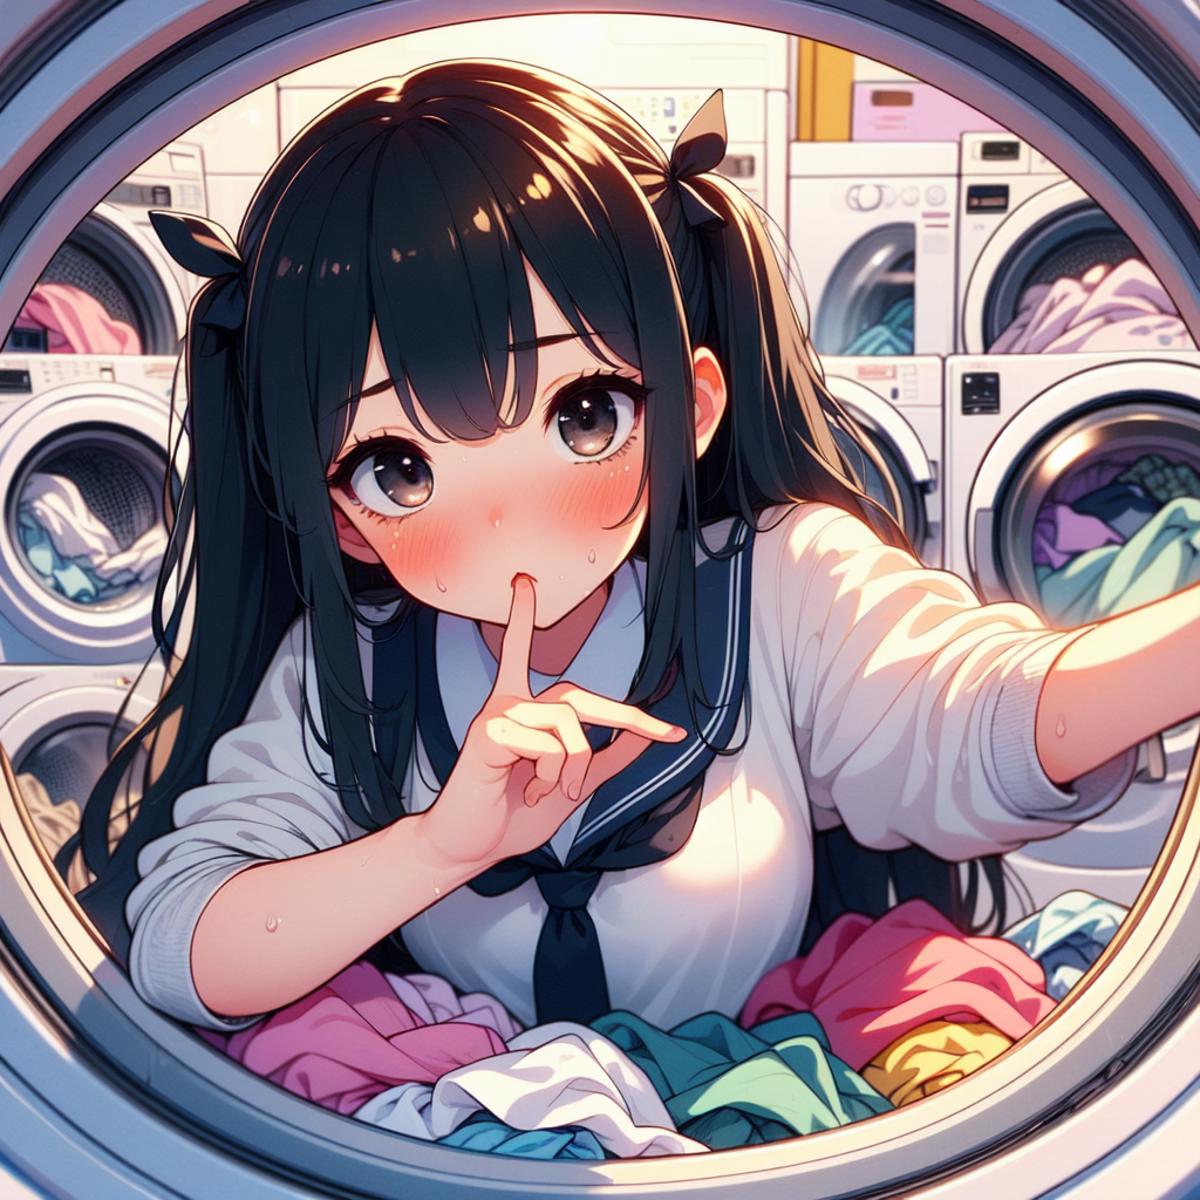 girl like washing machine image by ghostpaint